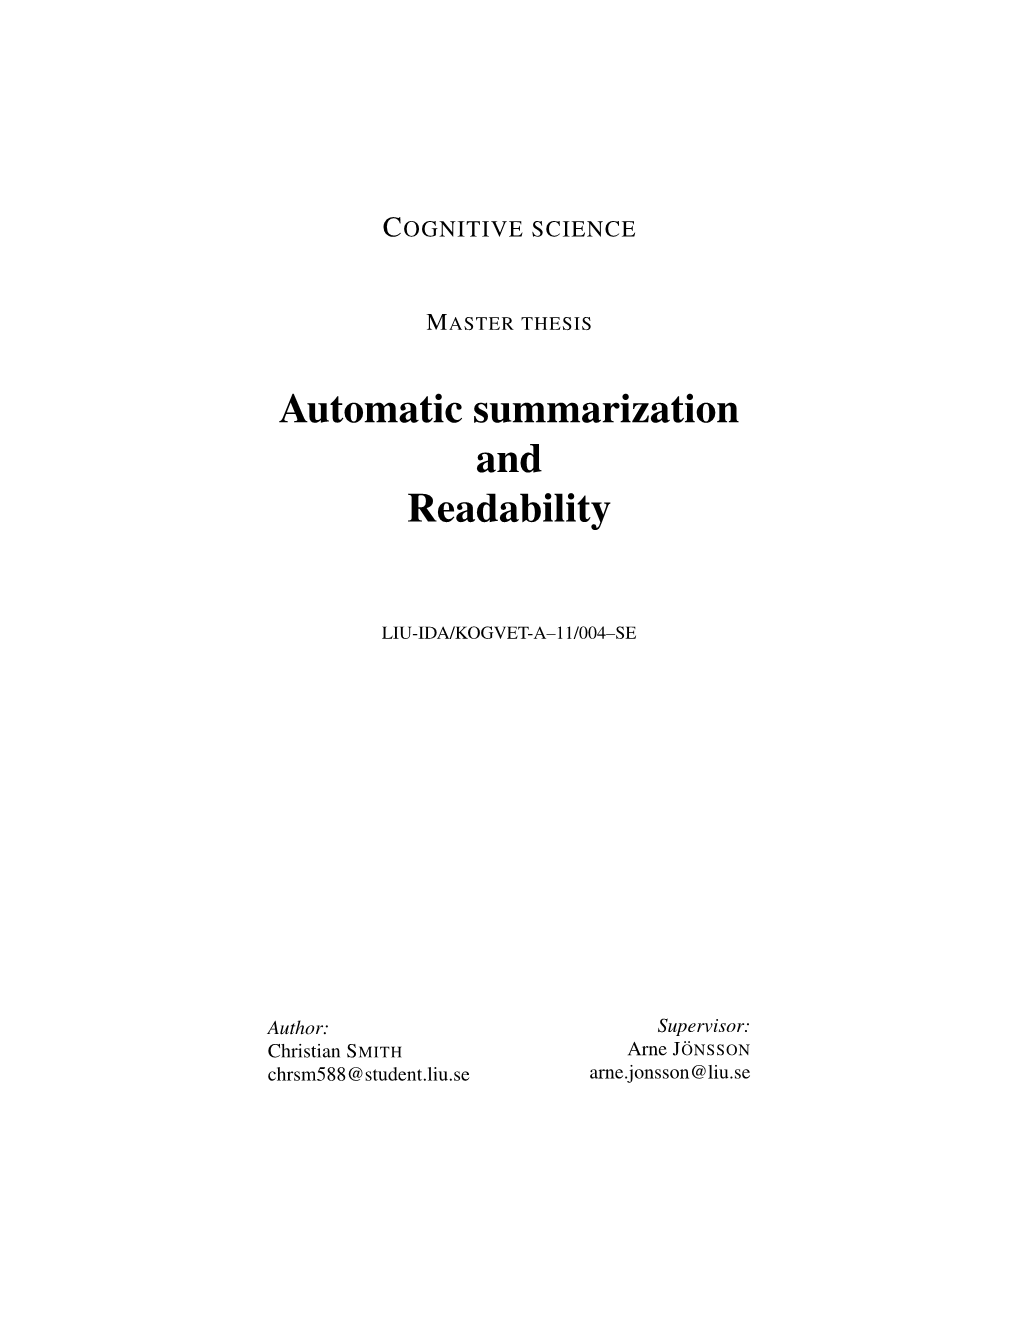 Automatic Summarization and Readability